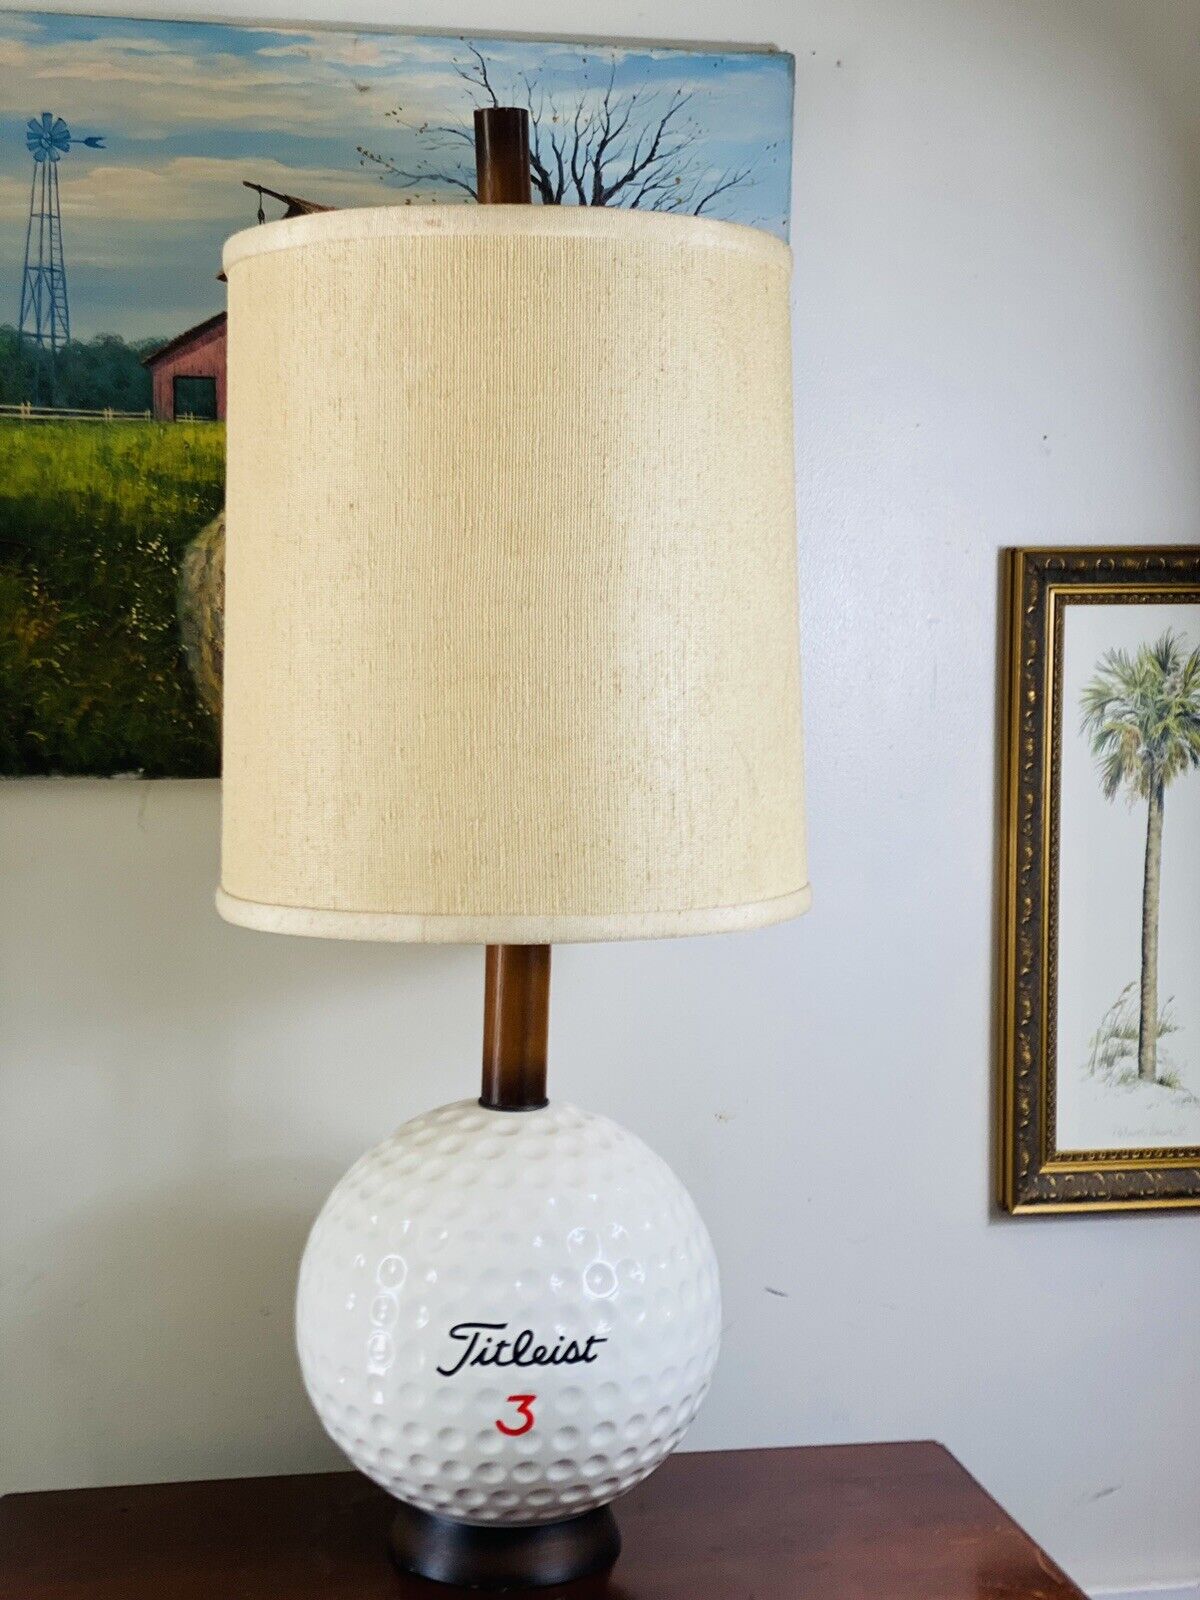 LARGE ANTIQUE TITLEIST GOLF BALL LAMP - VINTAGE 1960'S